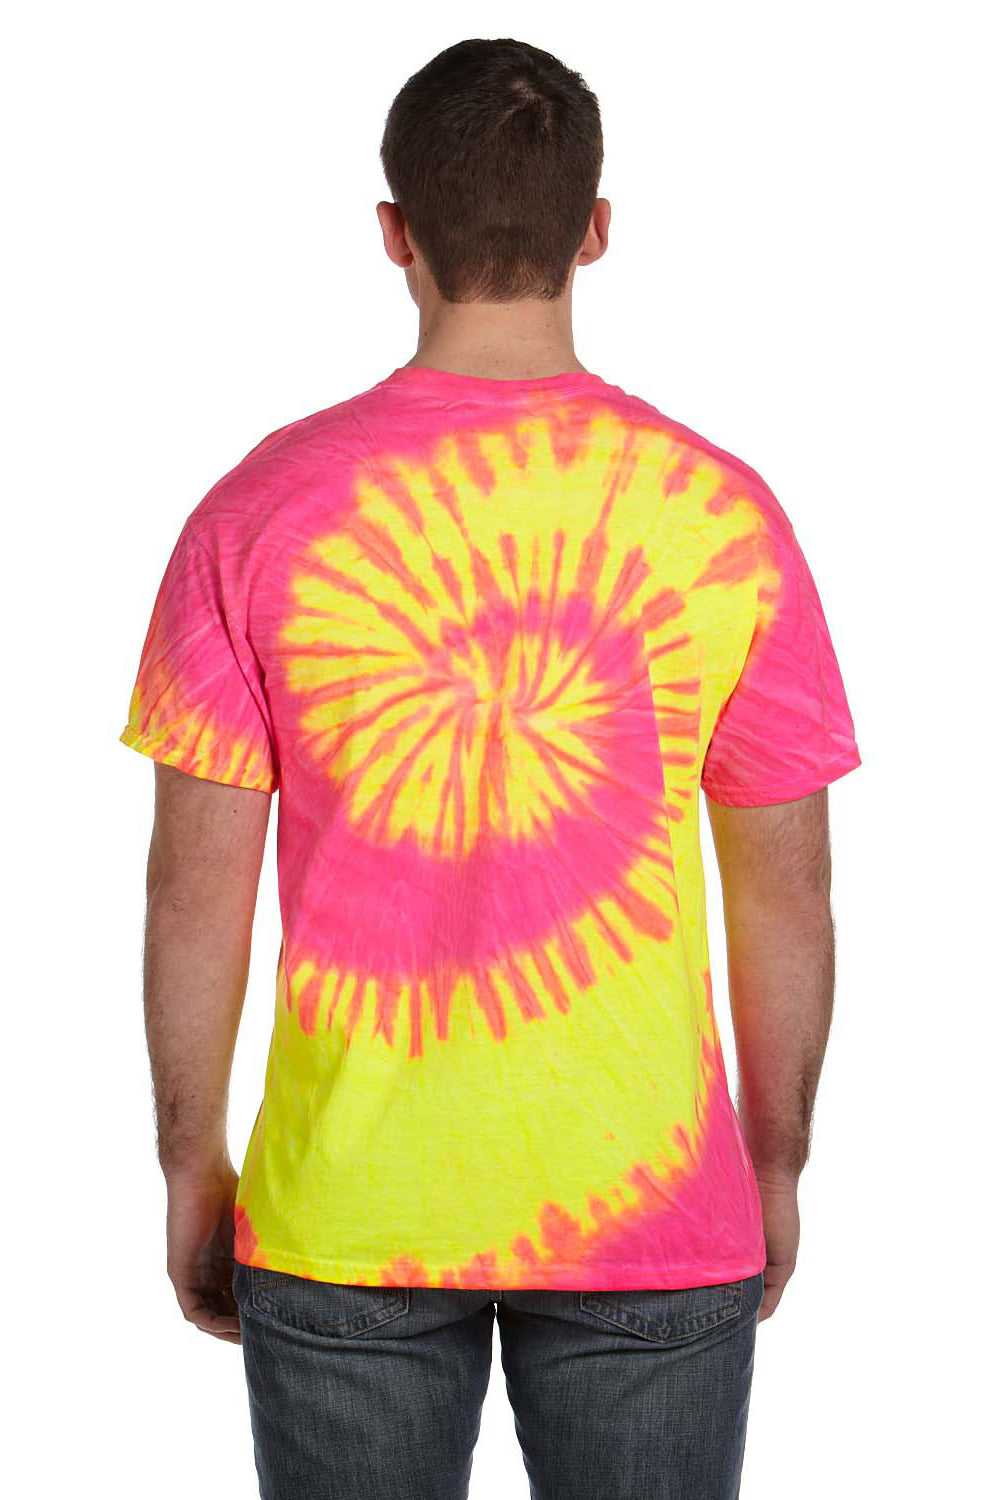 Tie-Dye CD100 Mens Short Sleeve Crewneck T-Shirt Flourescent Swirl Back